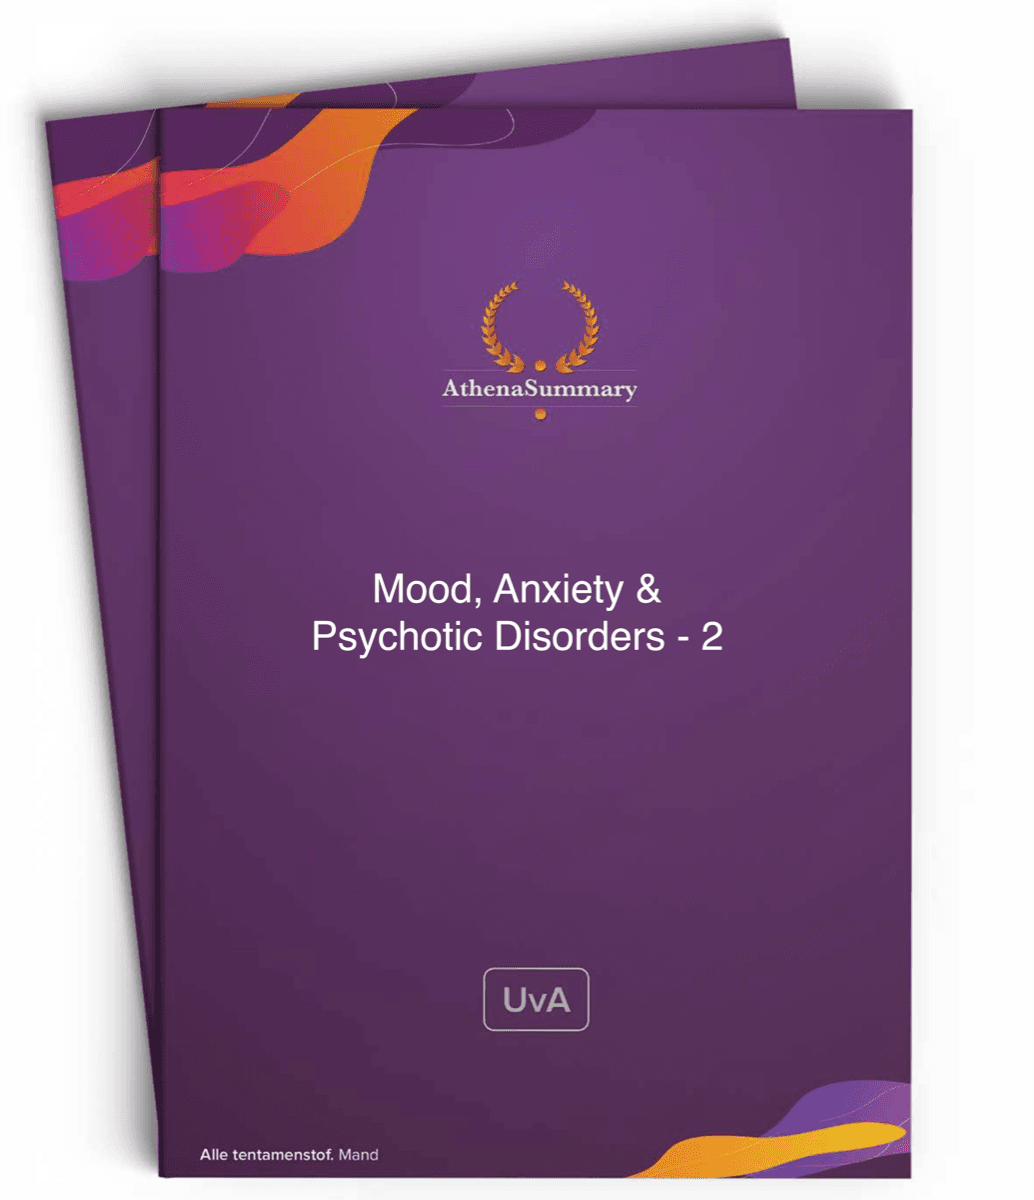 Literature Summary: Mood, Anxiety & Psychotic Disorders - 2